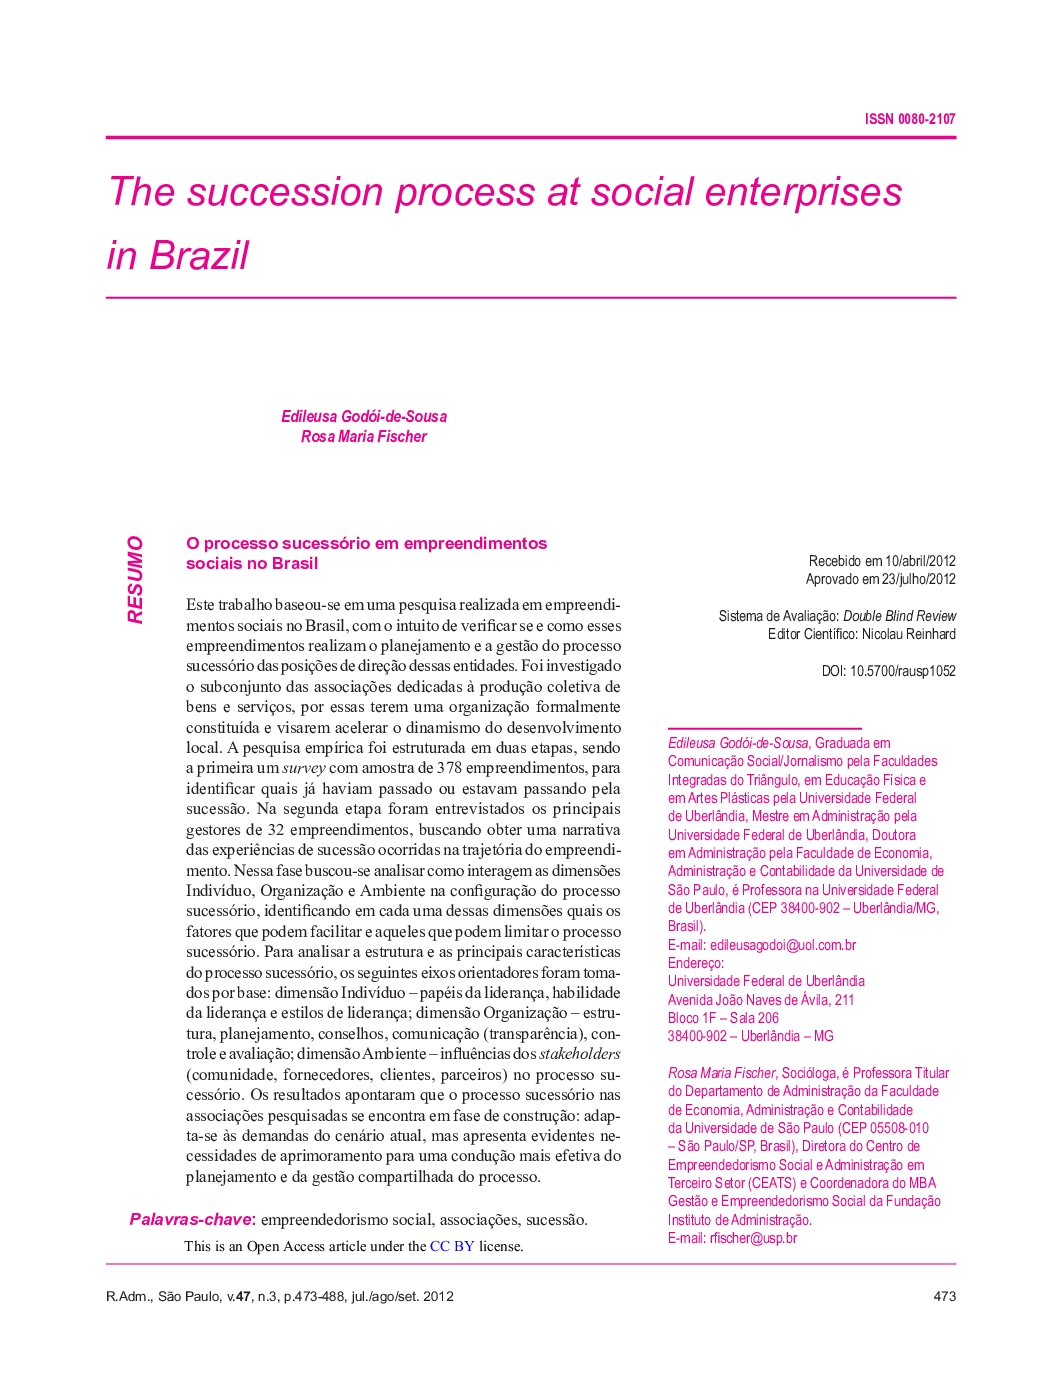 The succession process at social enterprises in Brazil